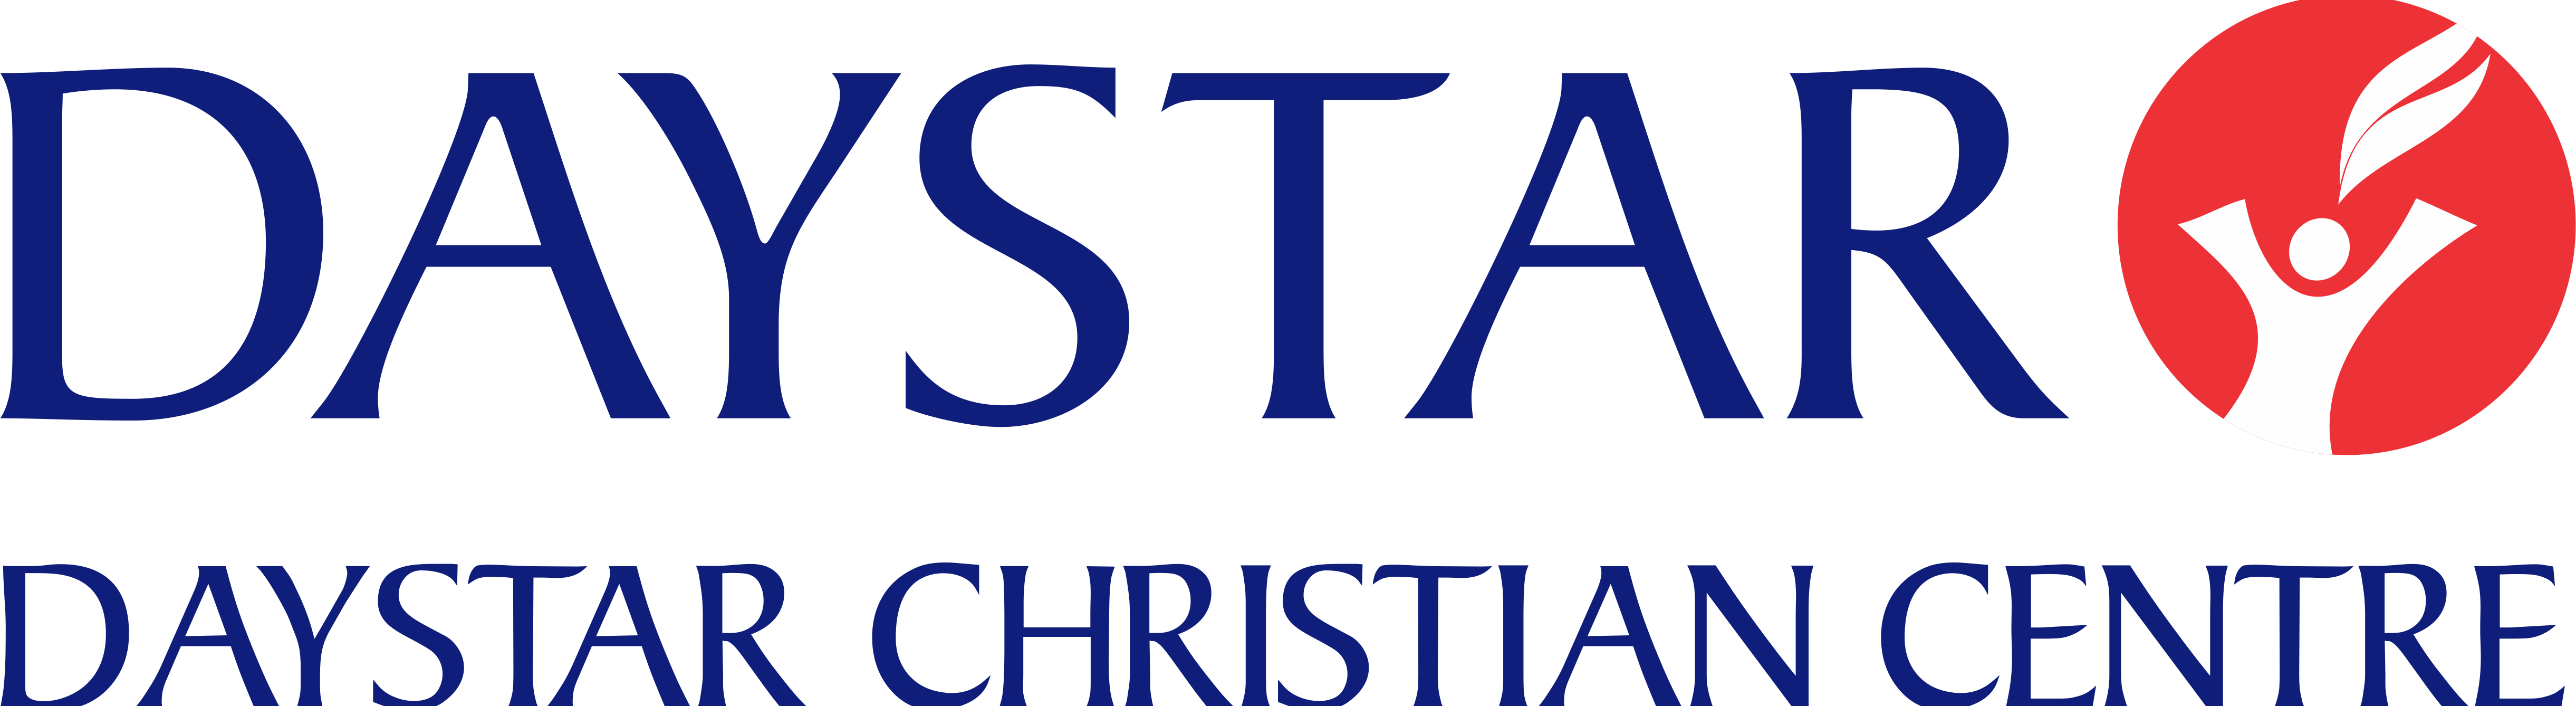 Daystar Christian Centre - logo